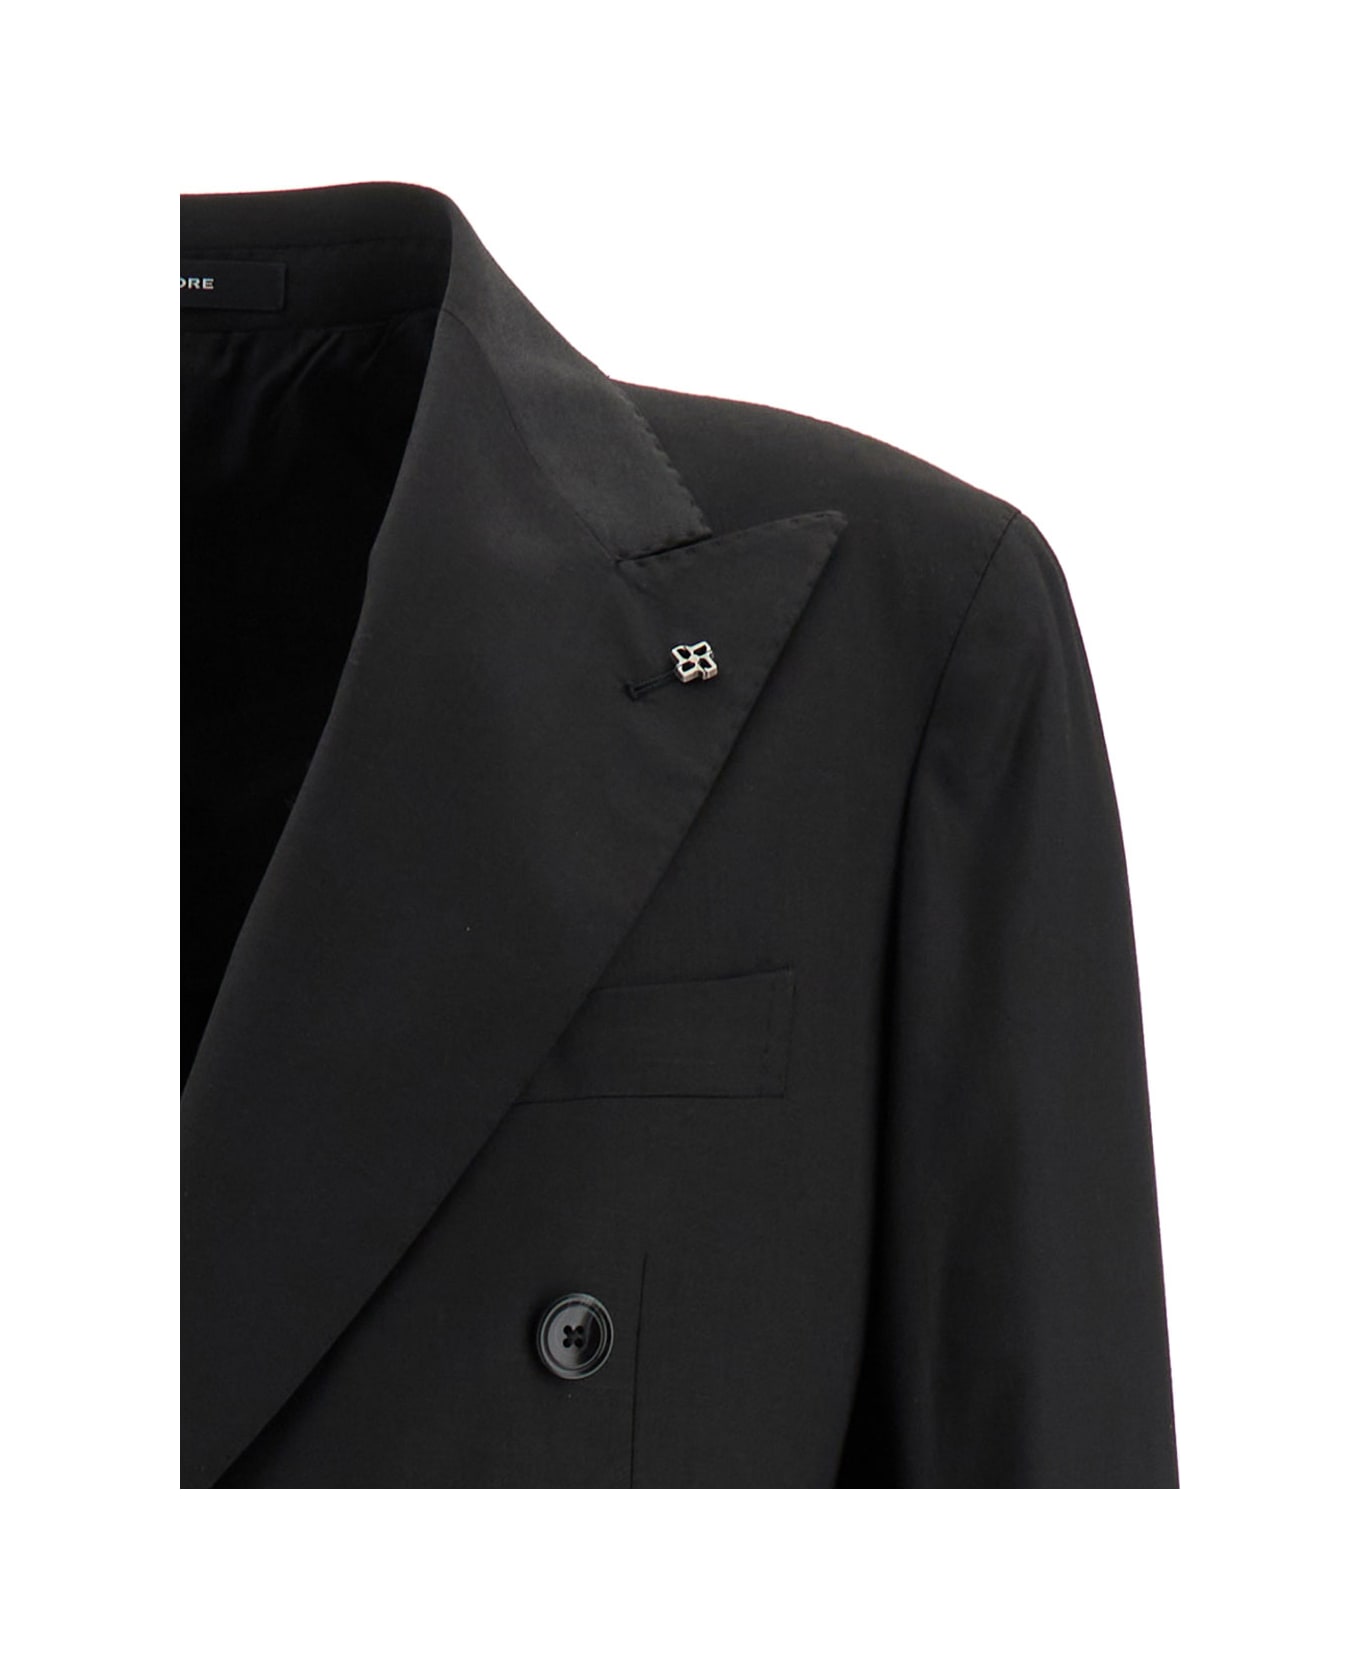 Tagliatore Black Double-breasted Jacket With Peak Revers In Wool Blend Man - Black スーツ